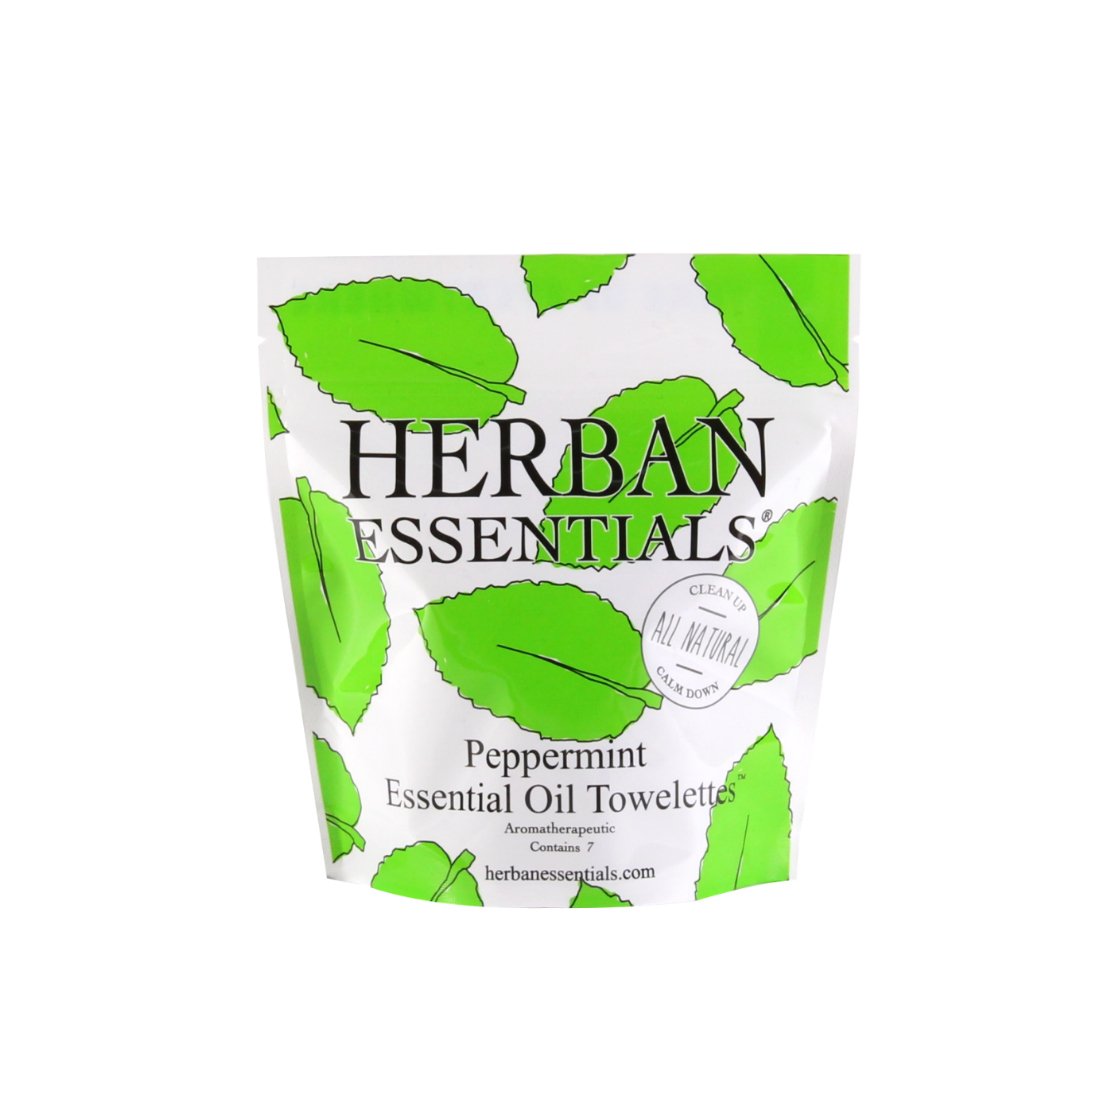 Herban Essentials Hand Wipes 7 Count